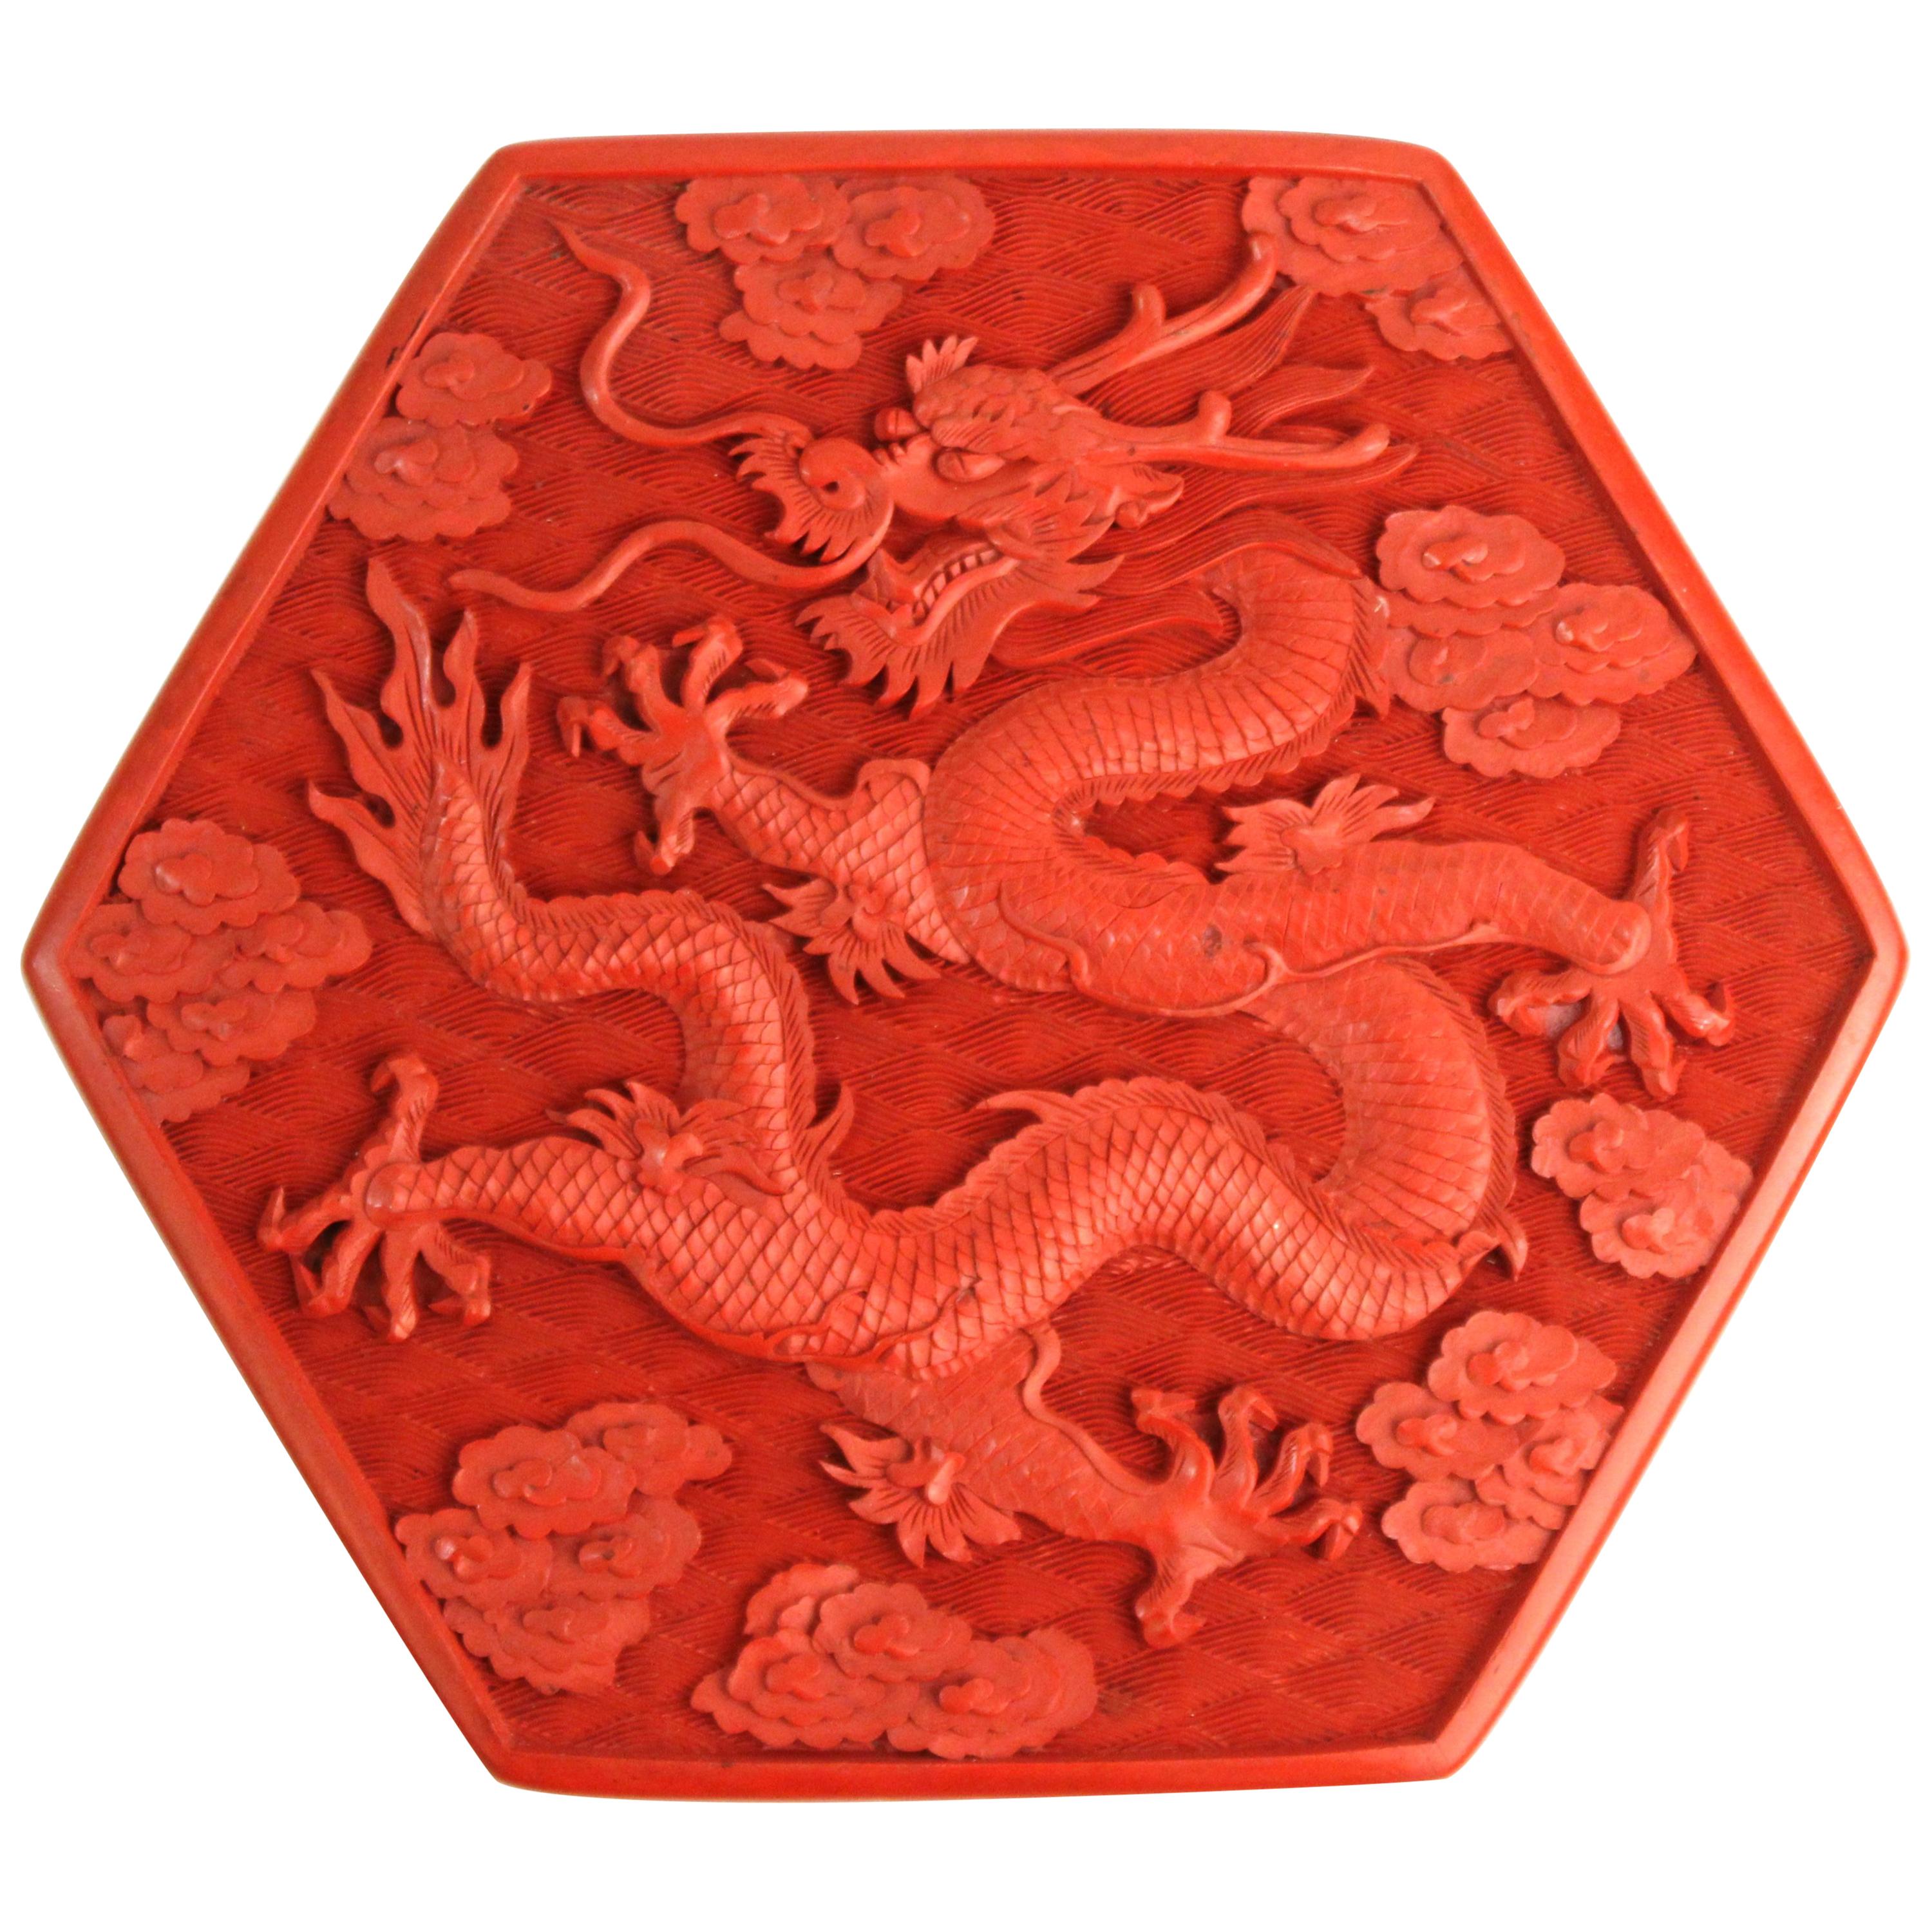 Chinese Cinnabar Box with Dragon Motif